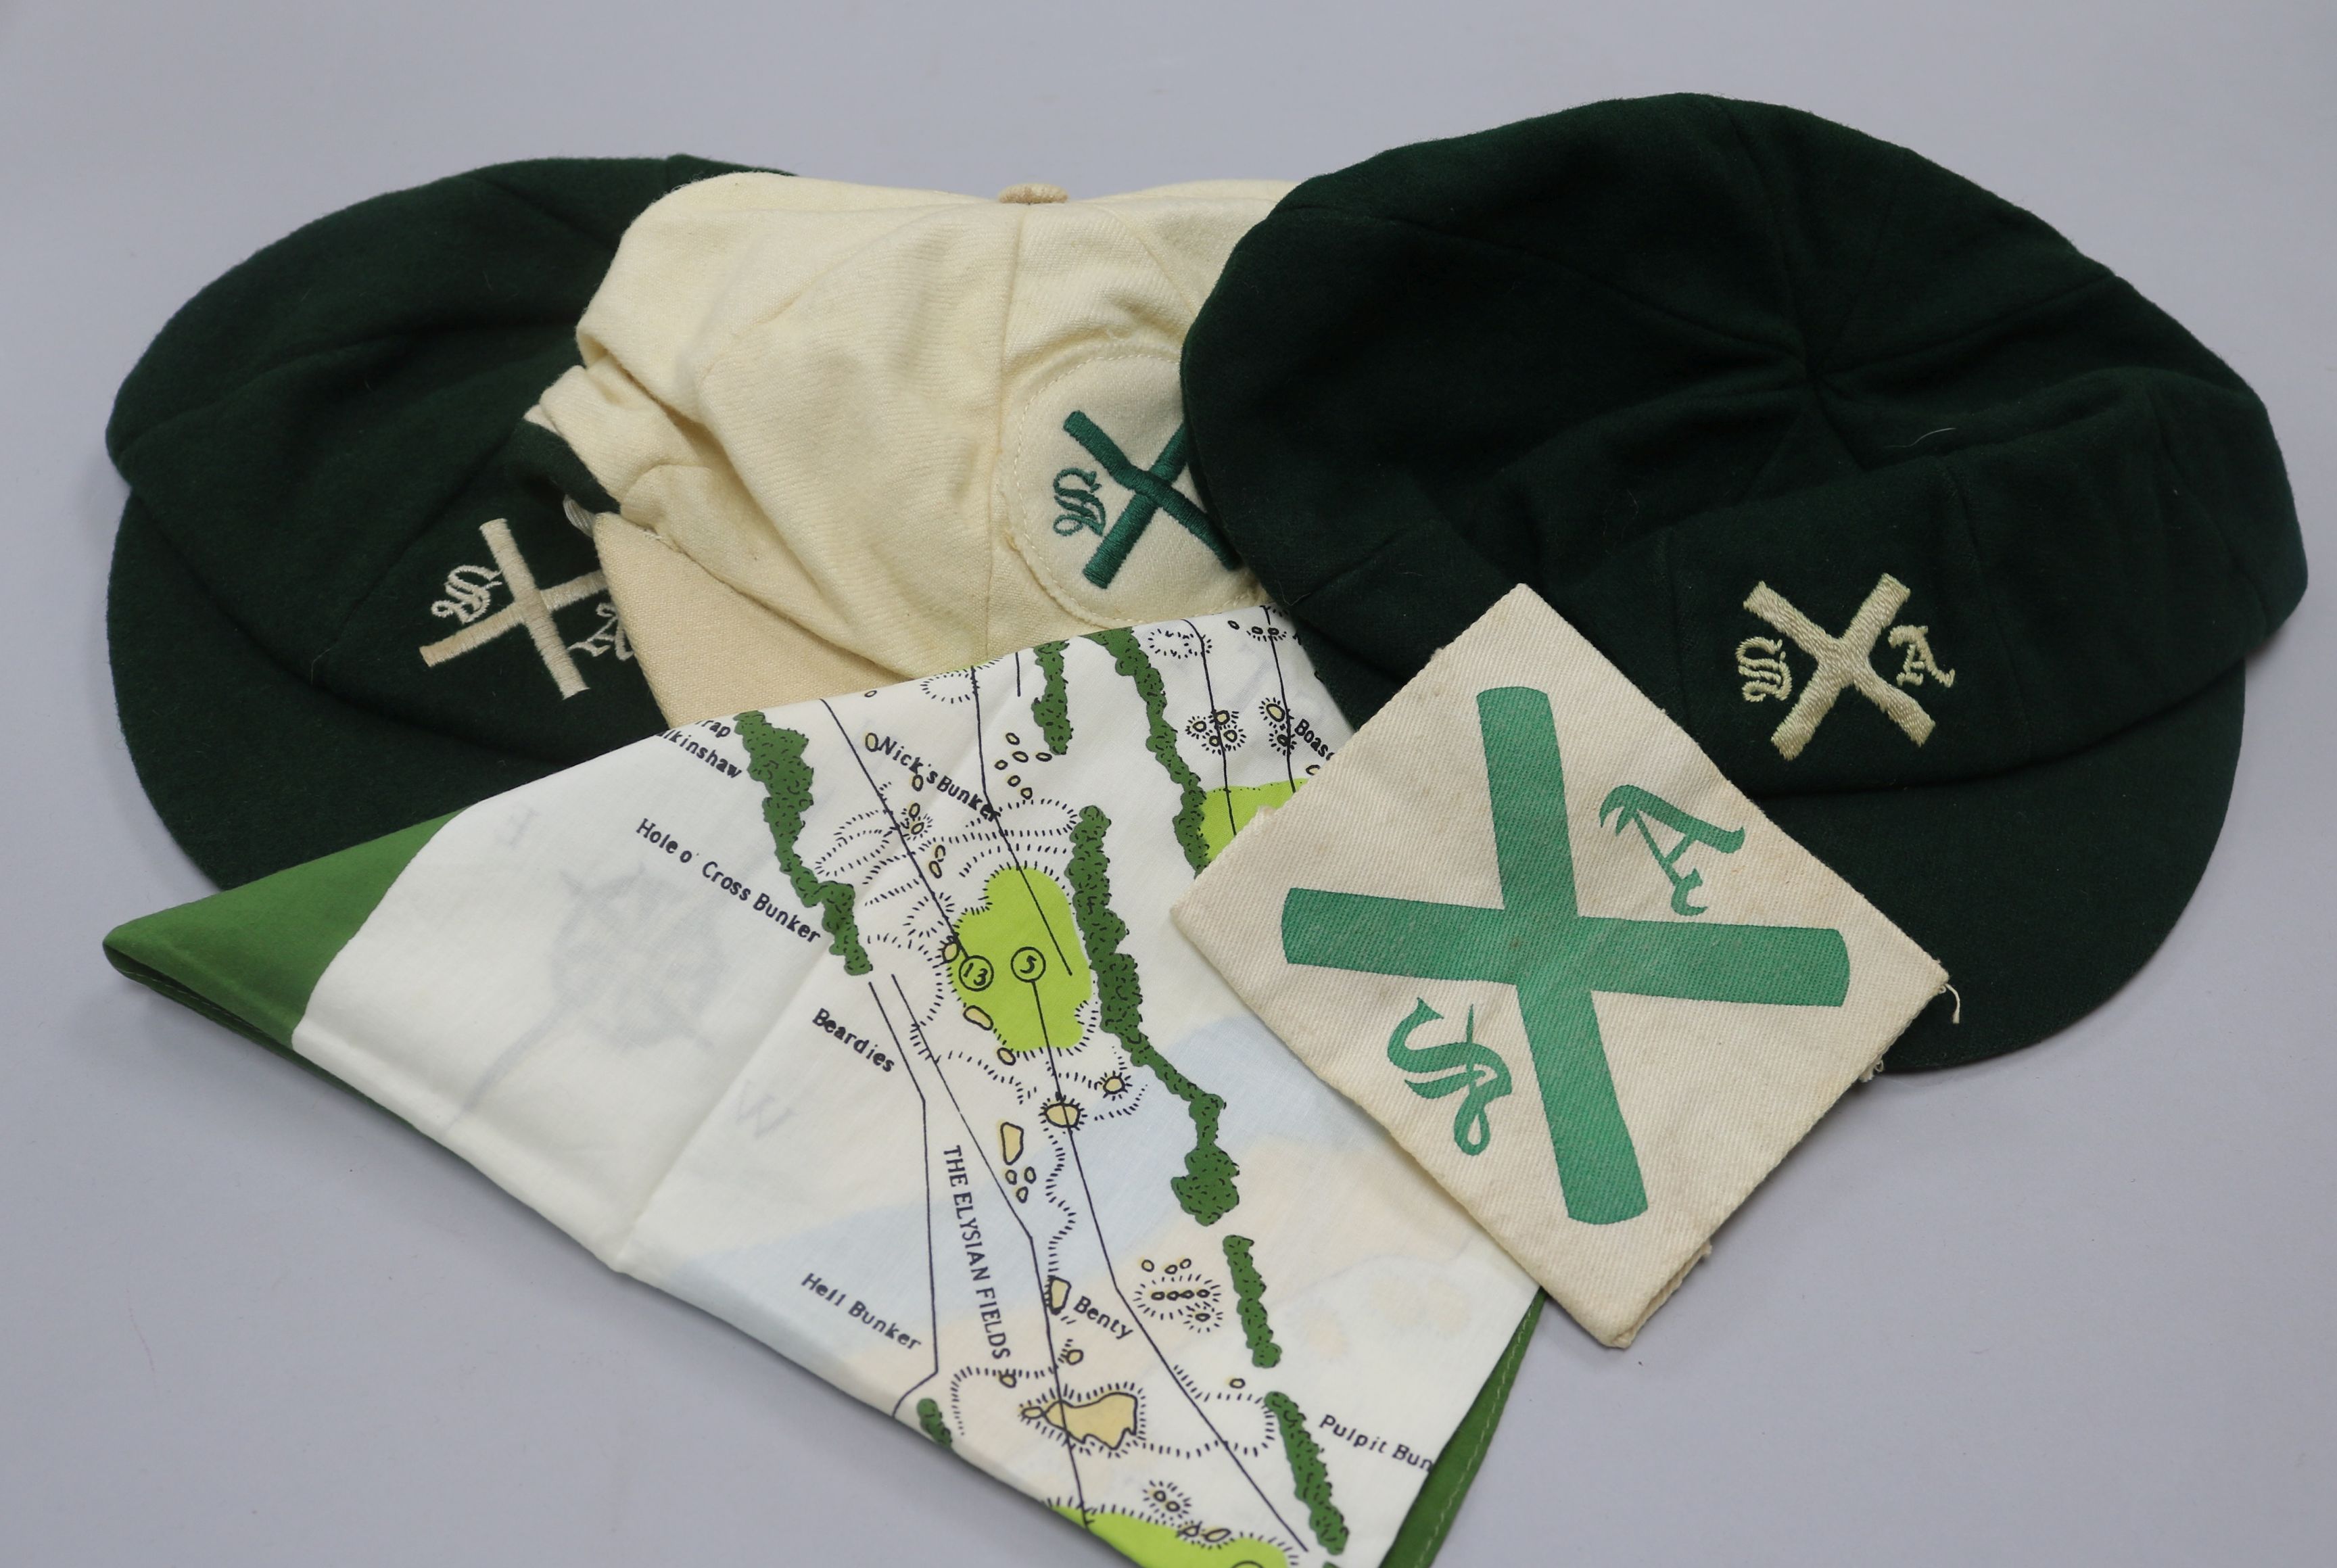 Three St Andrews caps, a scarf, etc.